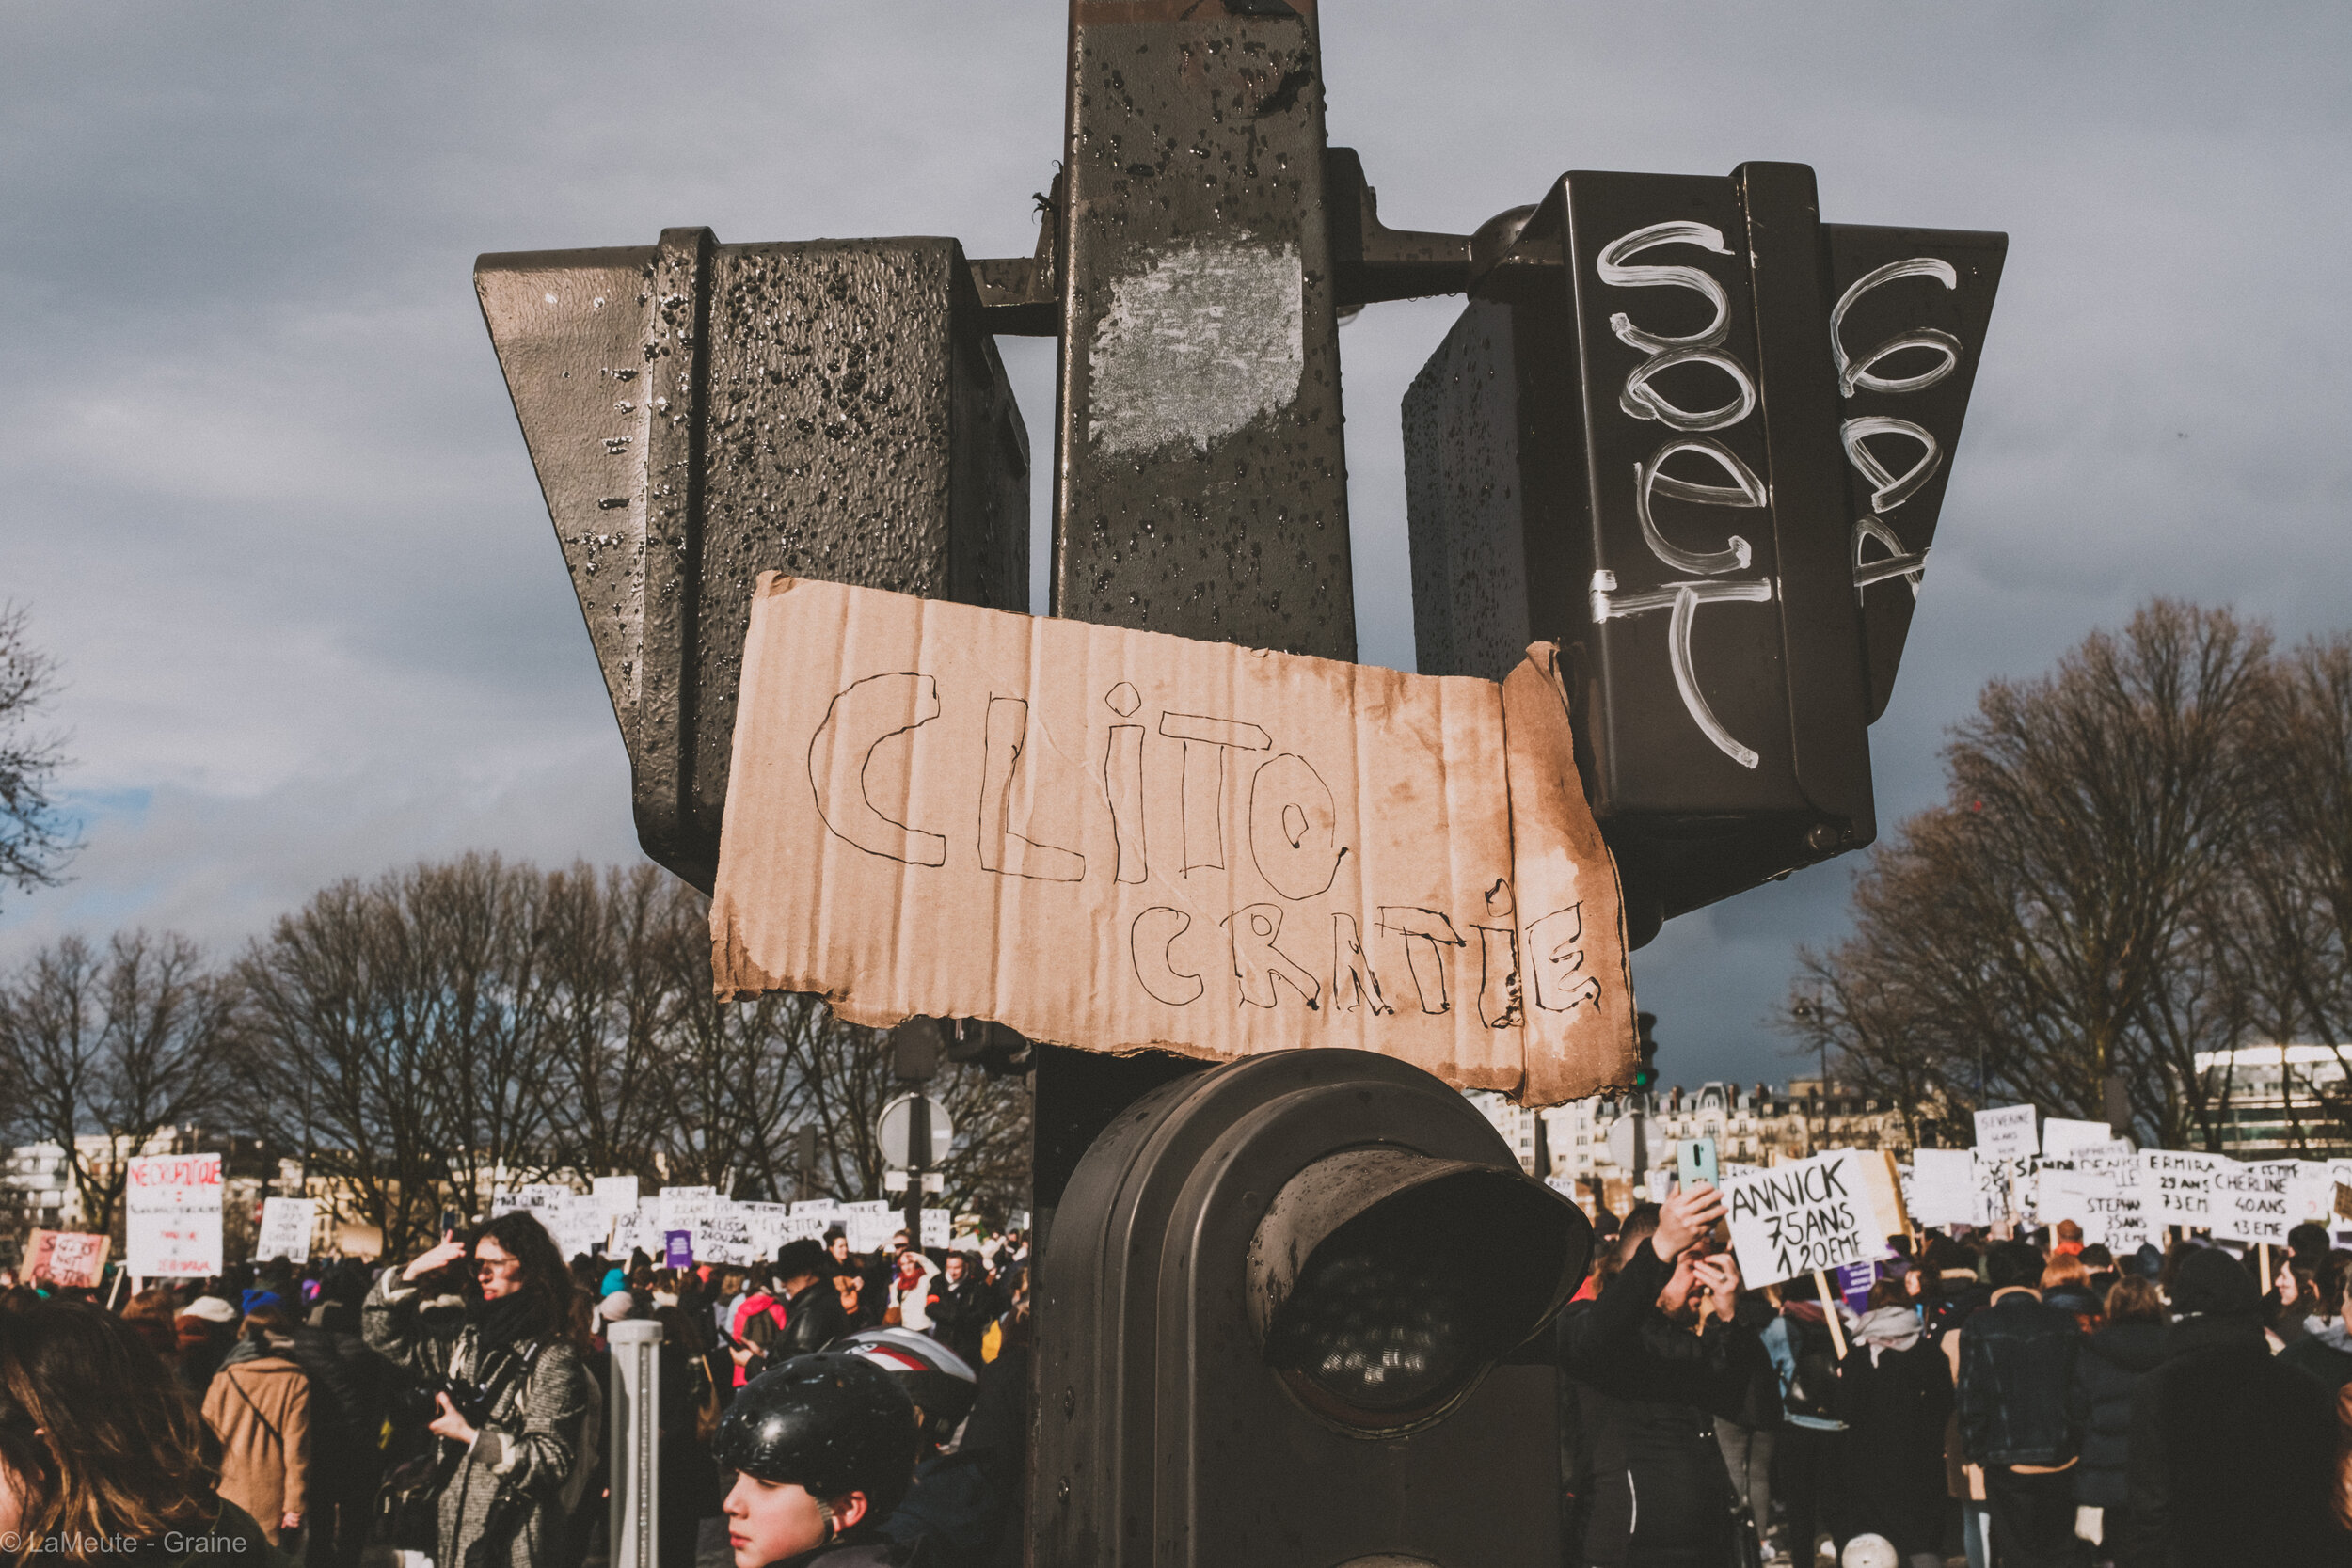    Clitocratie contre phallocratie.  © LaMeute - Graine     